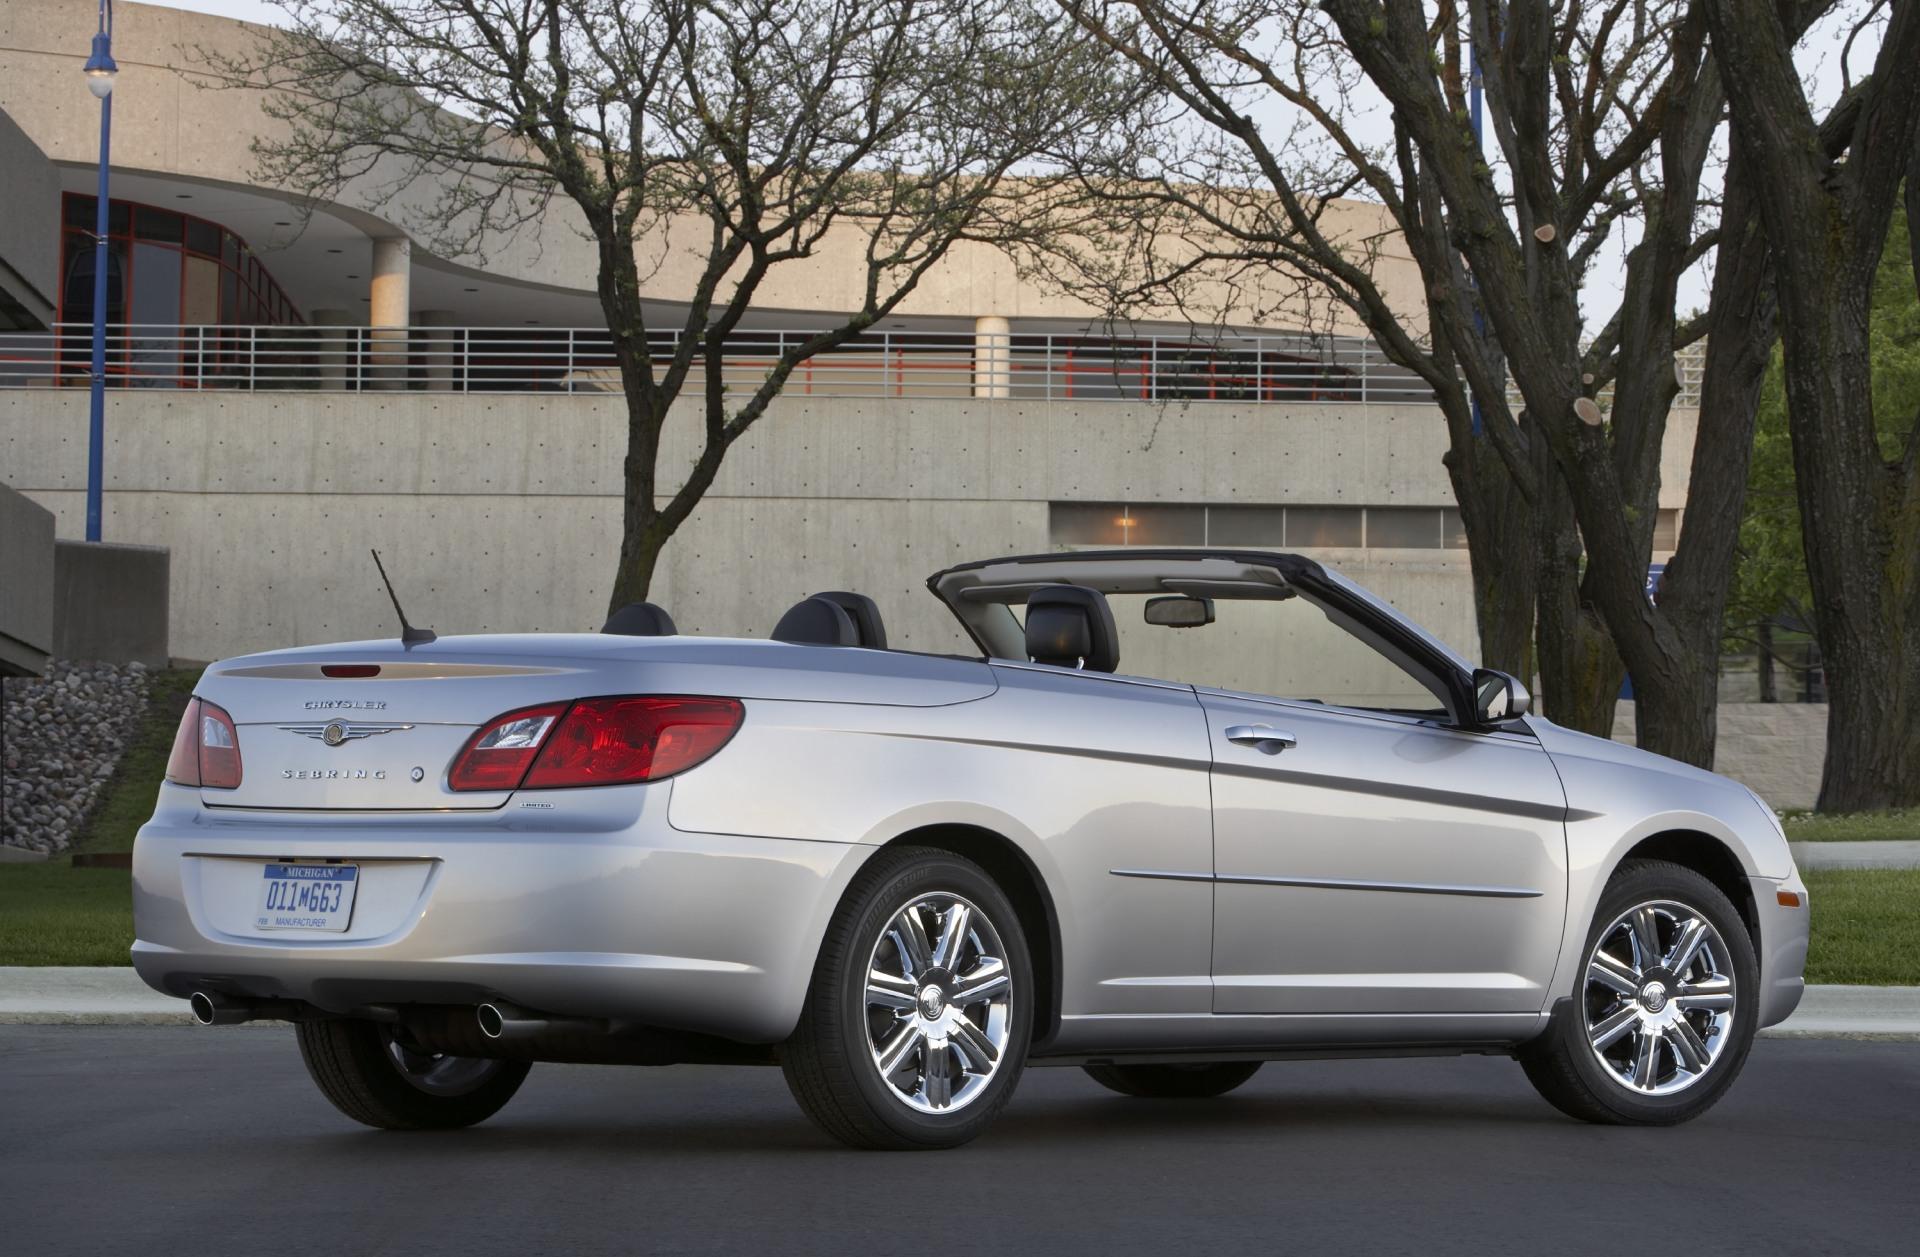 Chrysler convertible sebring replacement top #3